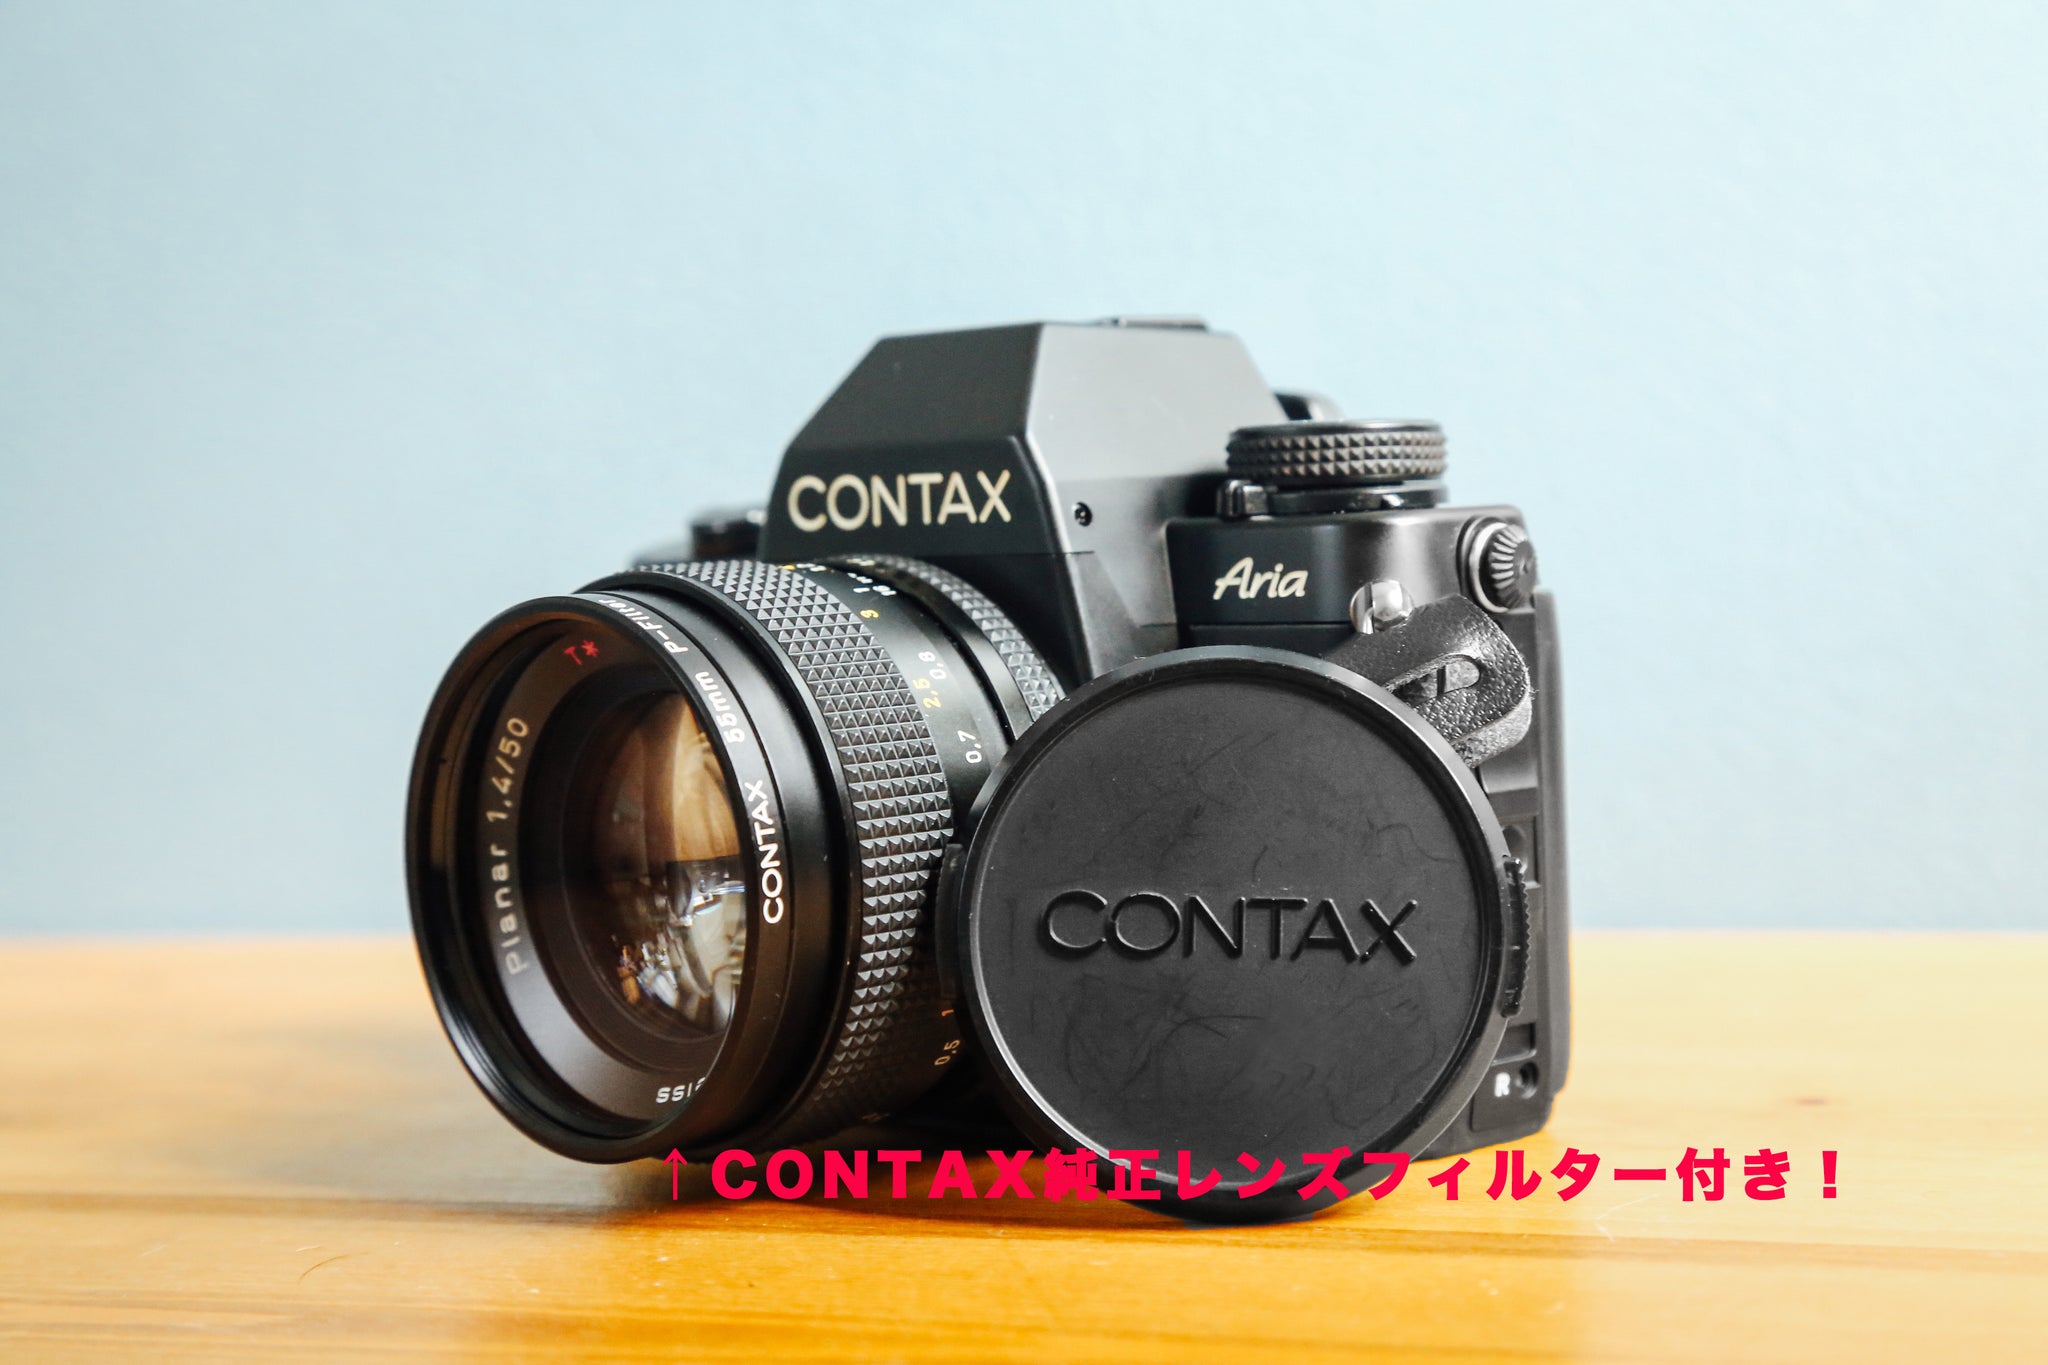 CONTAX ARIA レンズ付